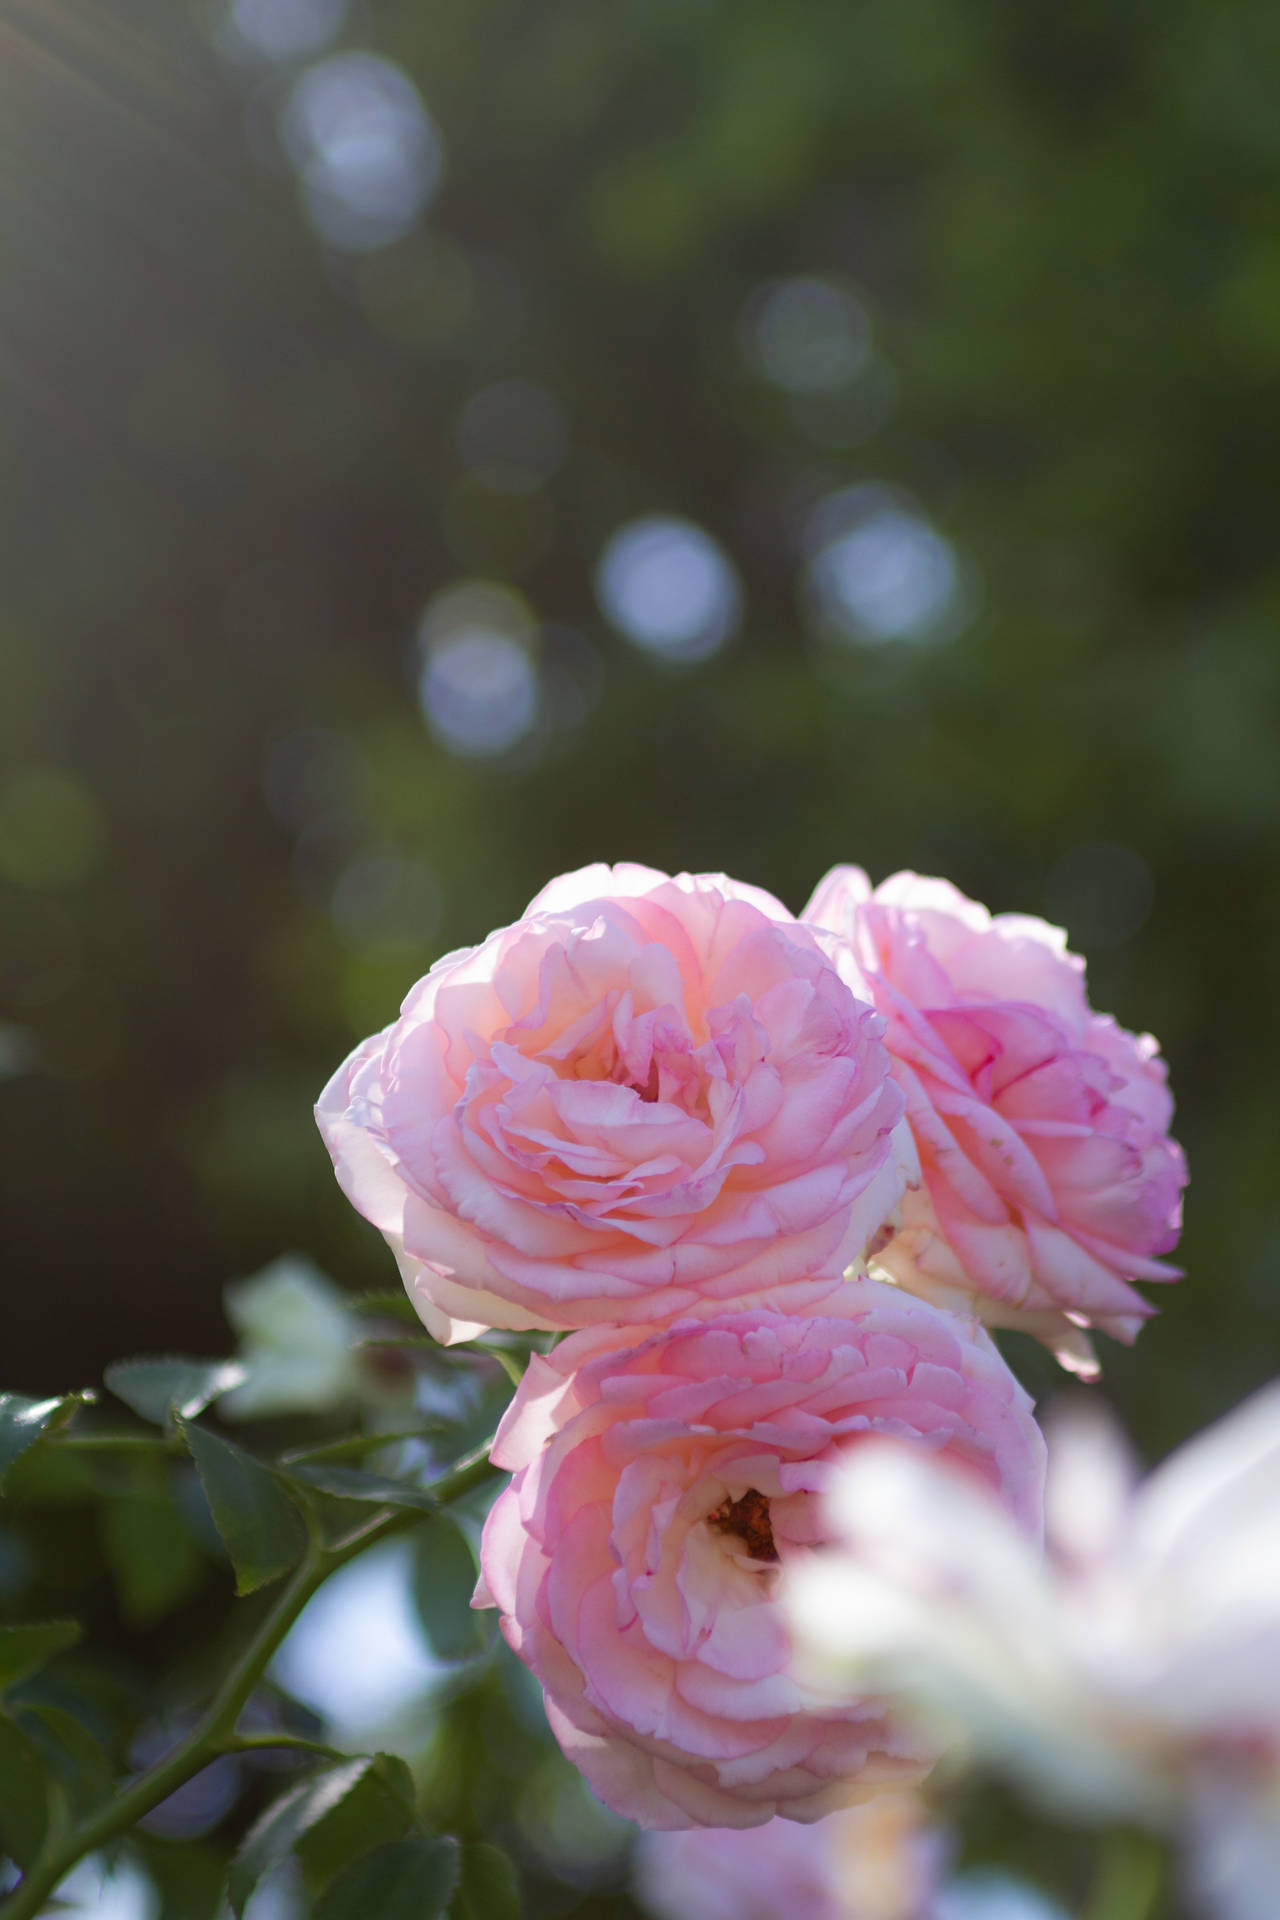 Aesthetic Rose Blooming During Daytime